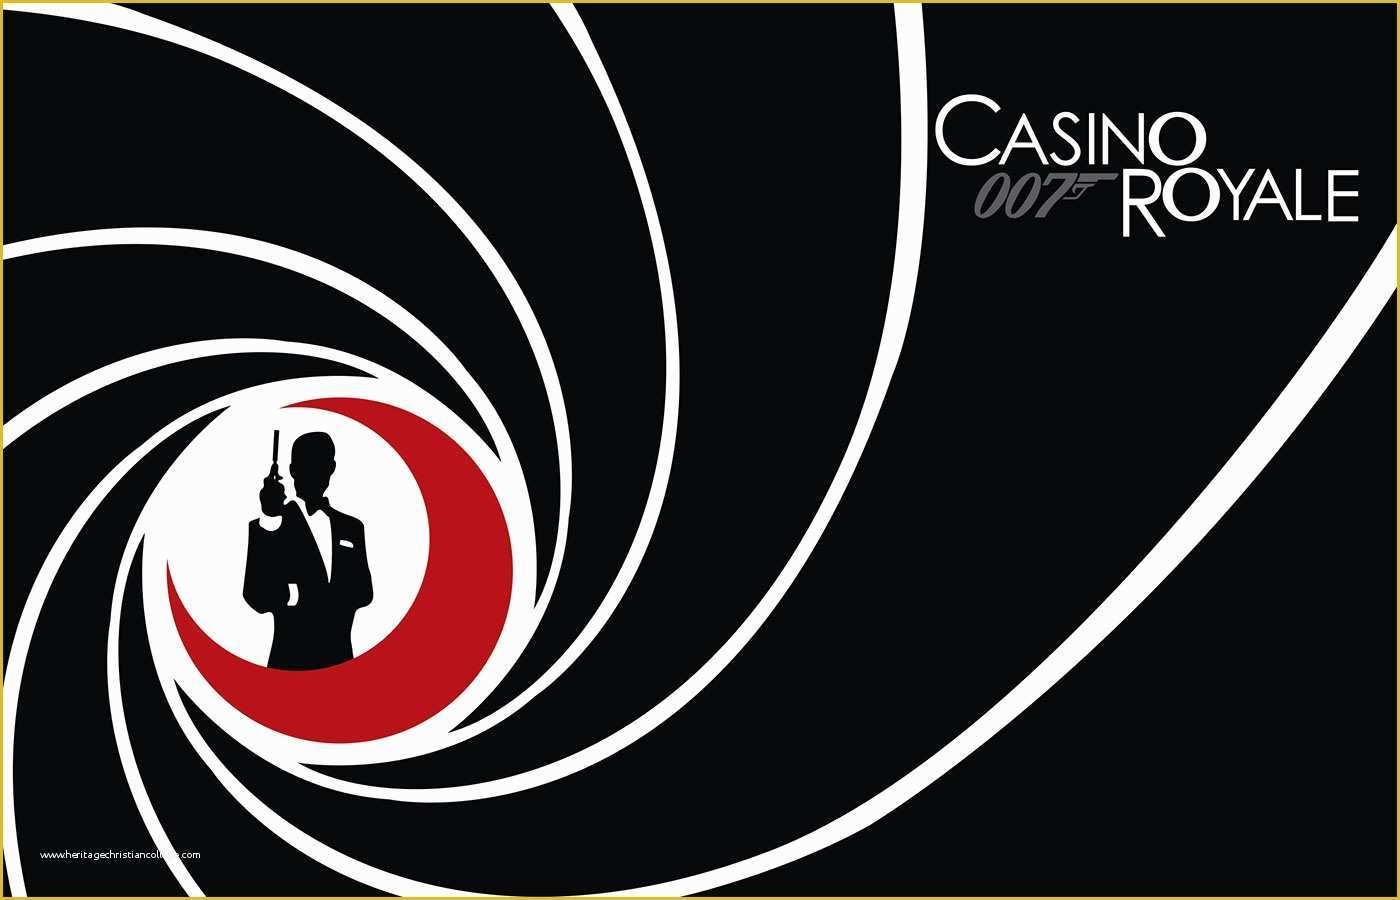 Free James Bond Invitation Template Of Casino Royale